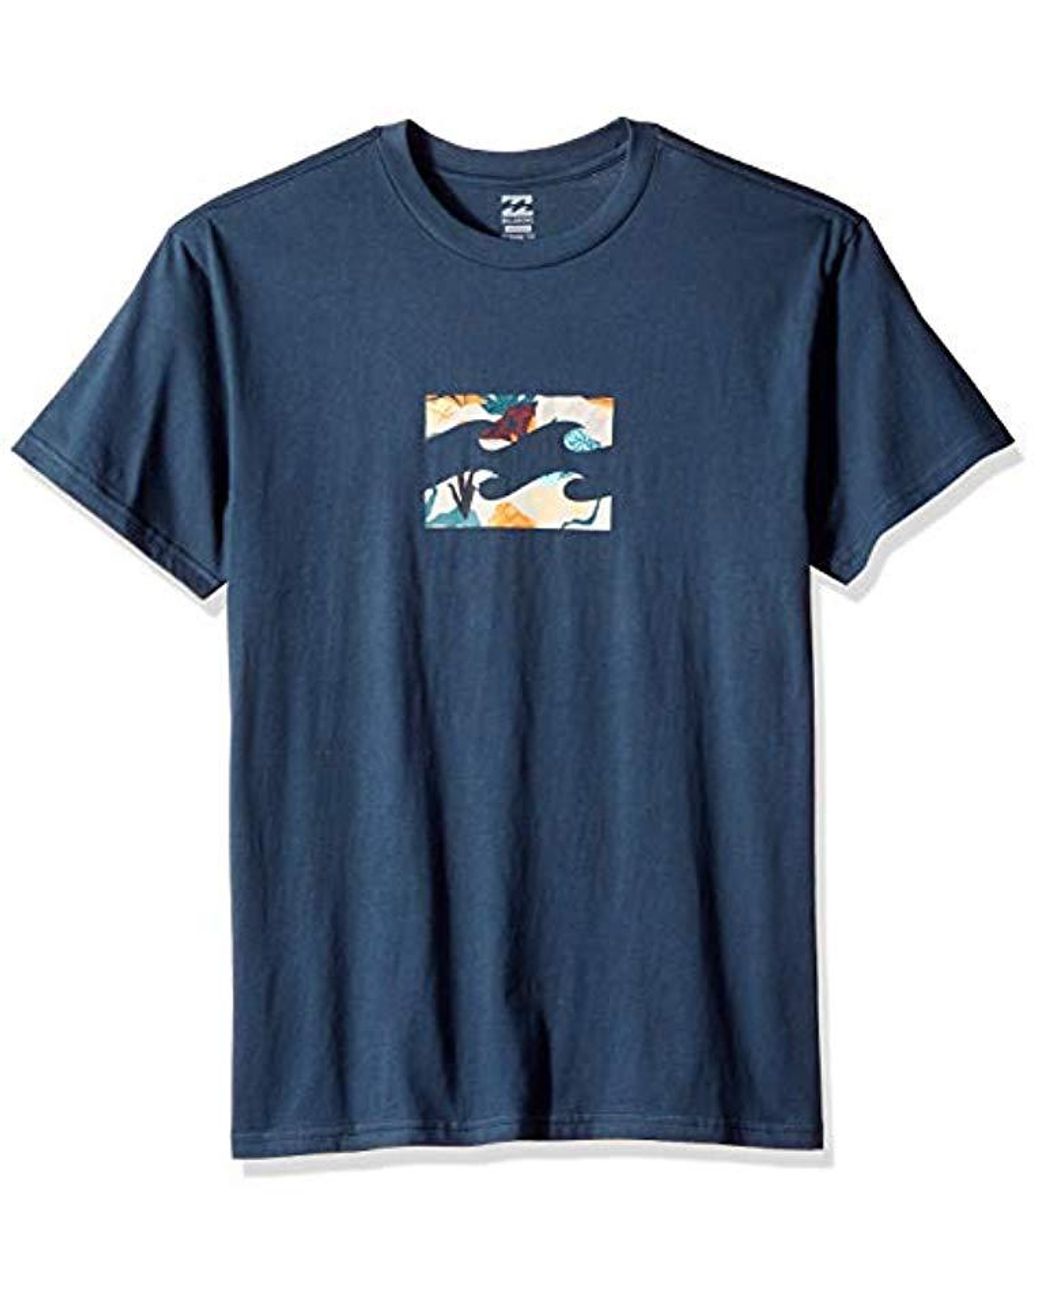 Billabong T-shirts in Blue for Men - Lyst